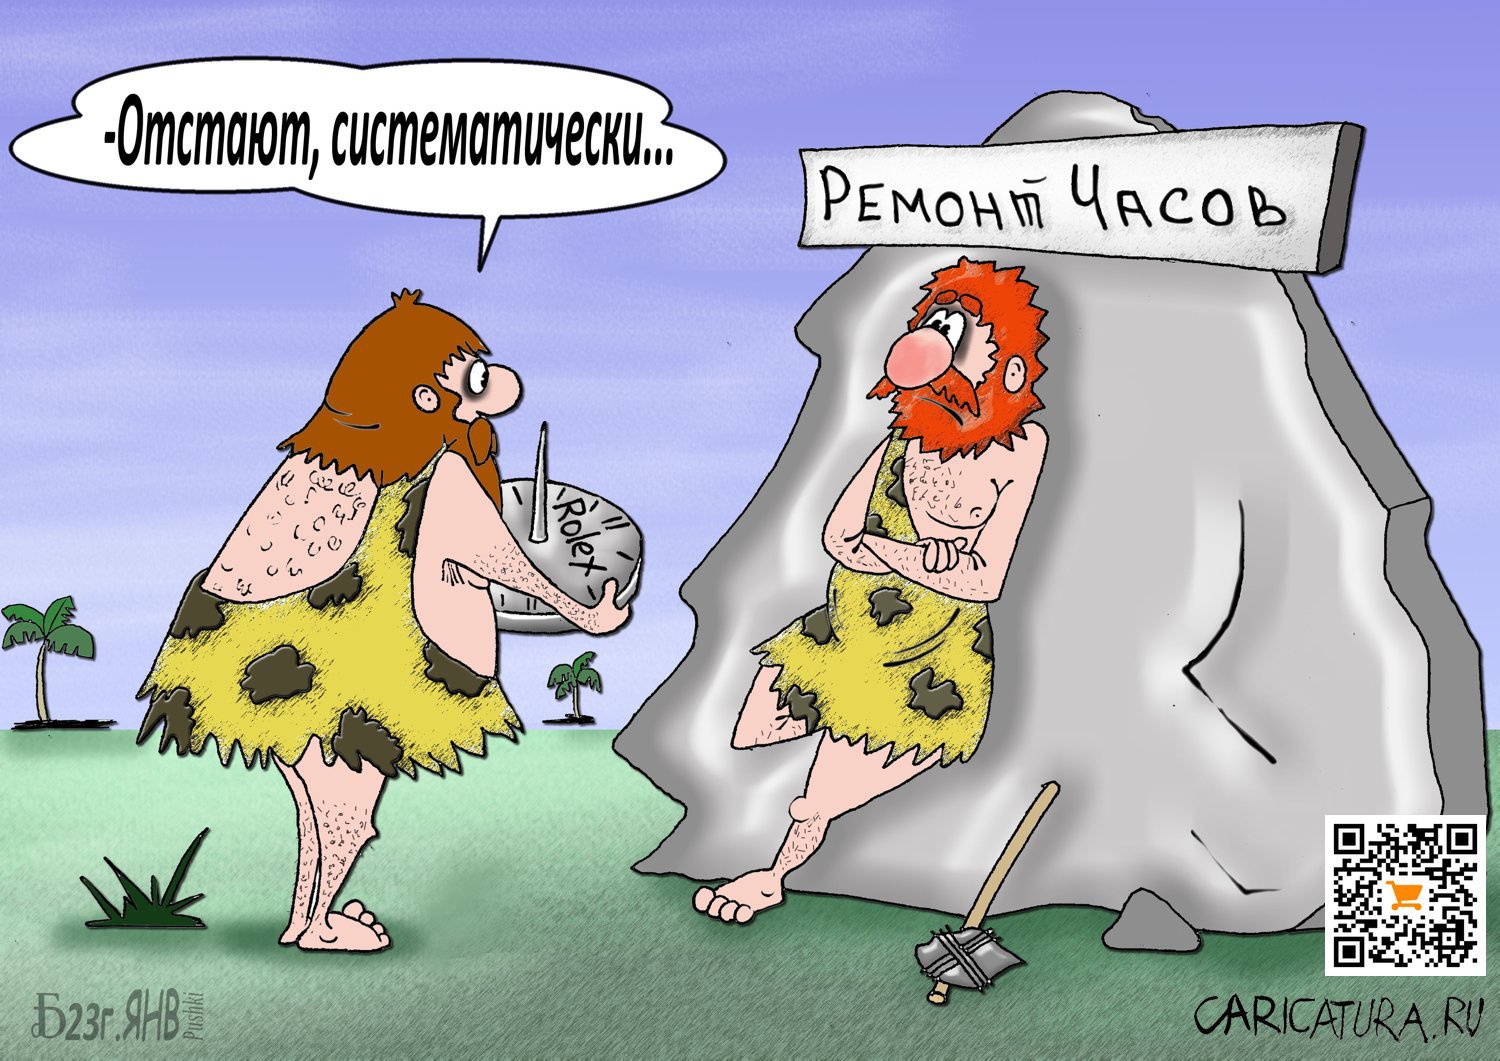 Карикатура "ПроЧасики", Борис Демин